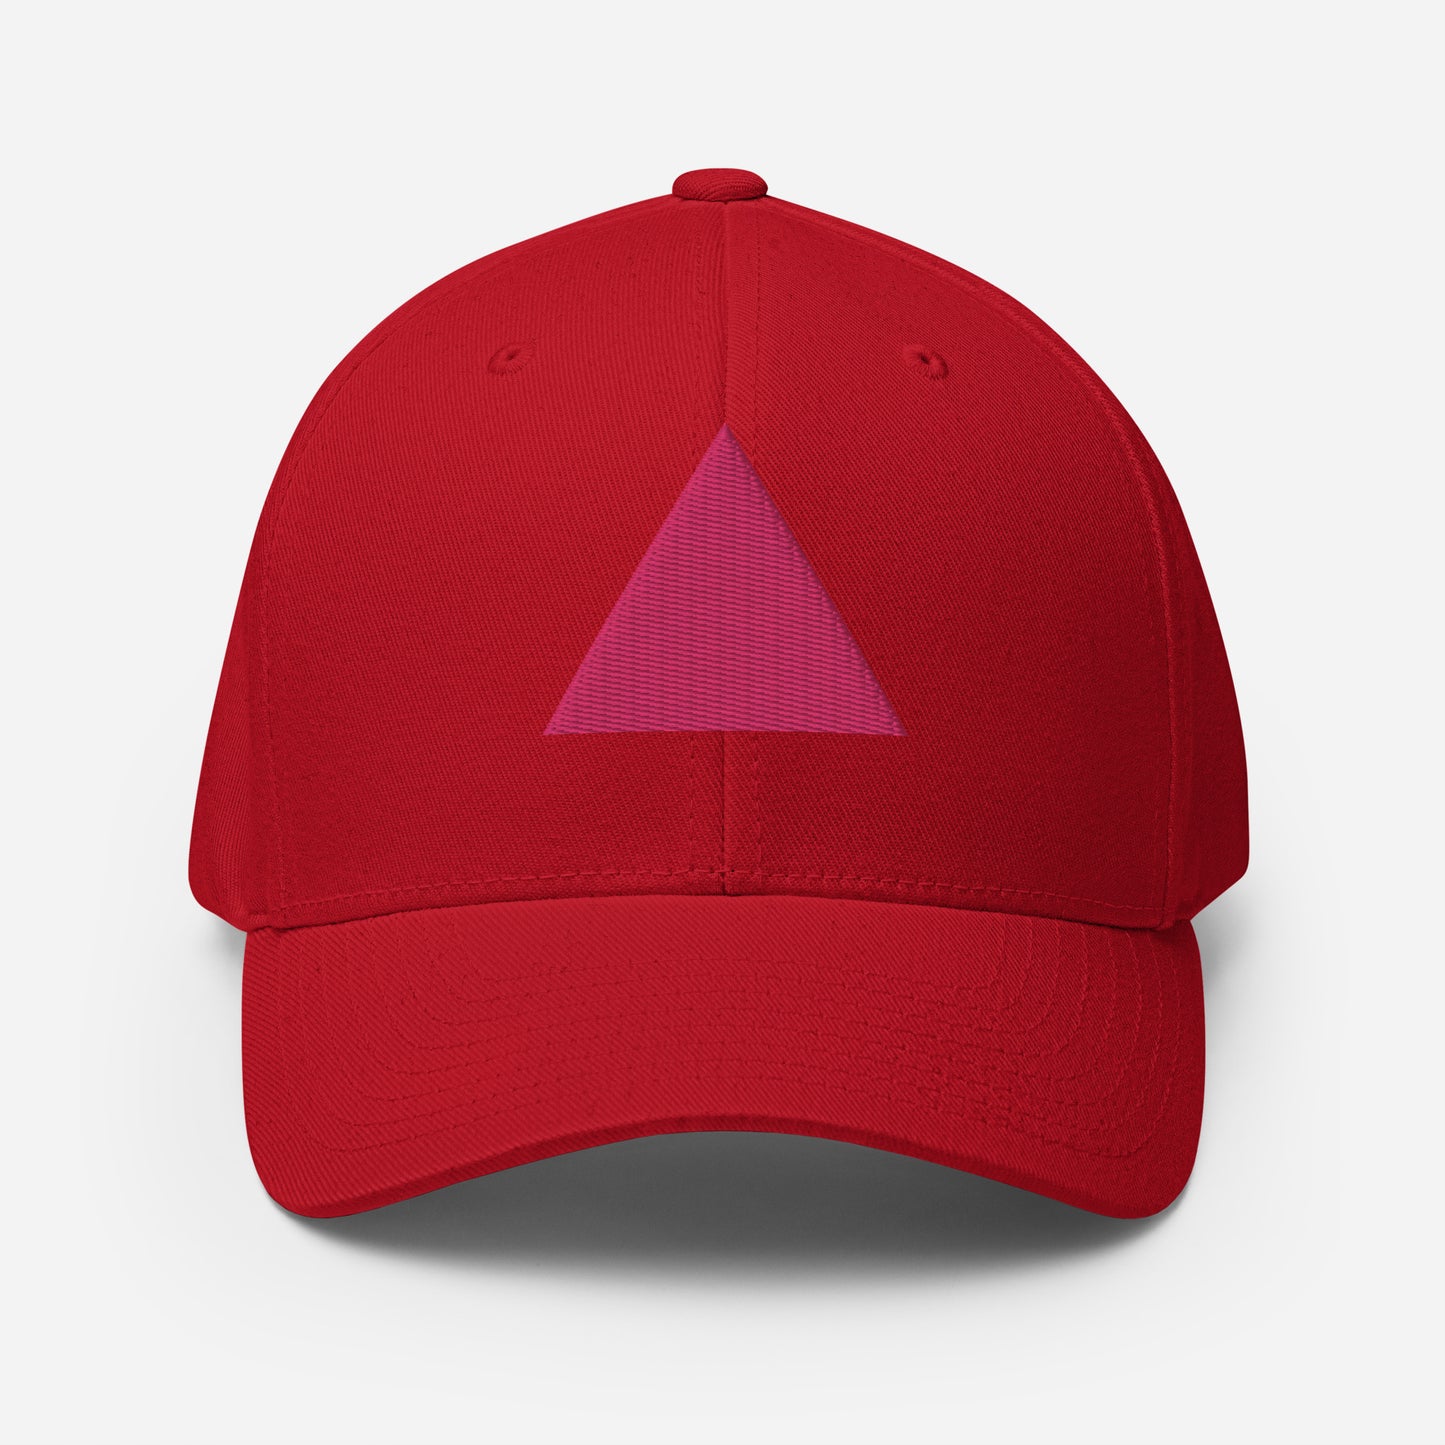 Pink Triangle Cap